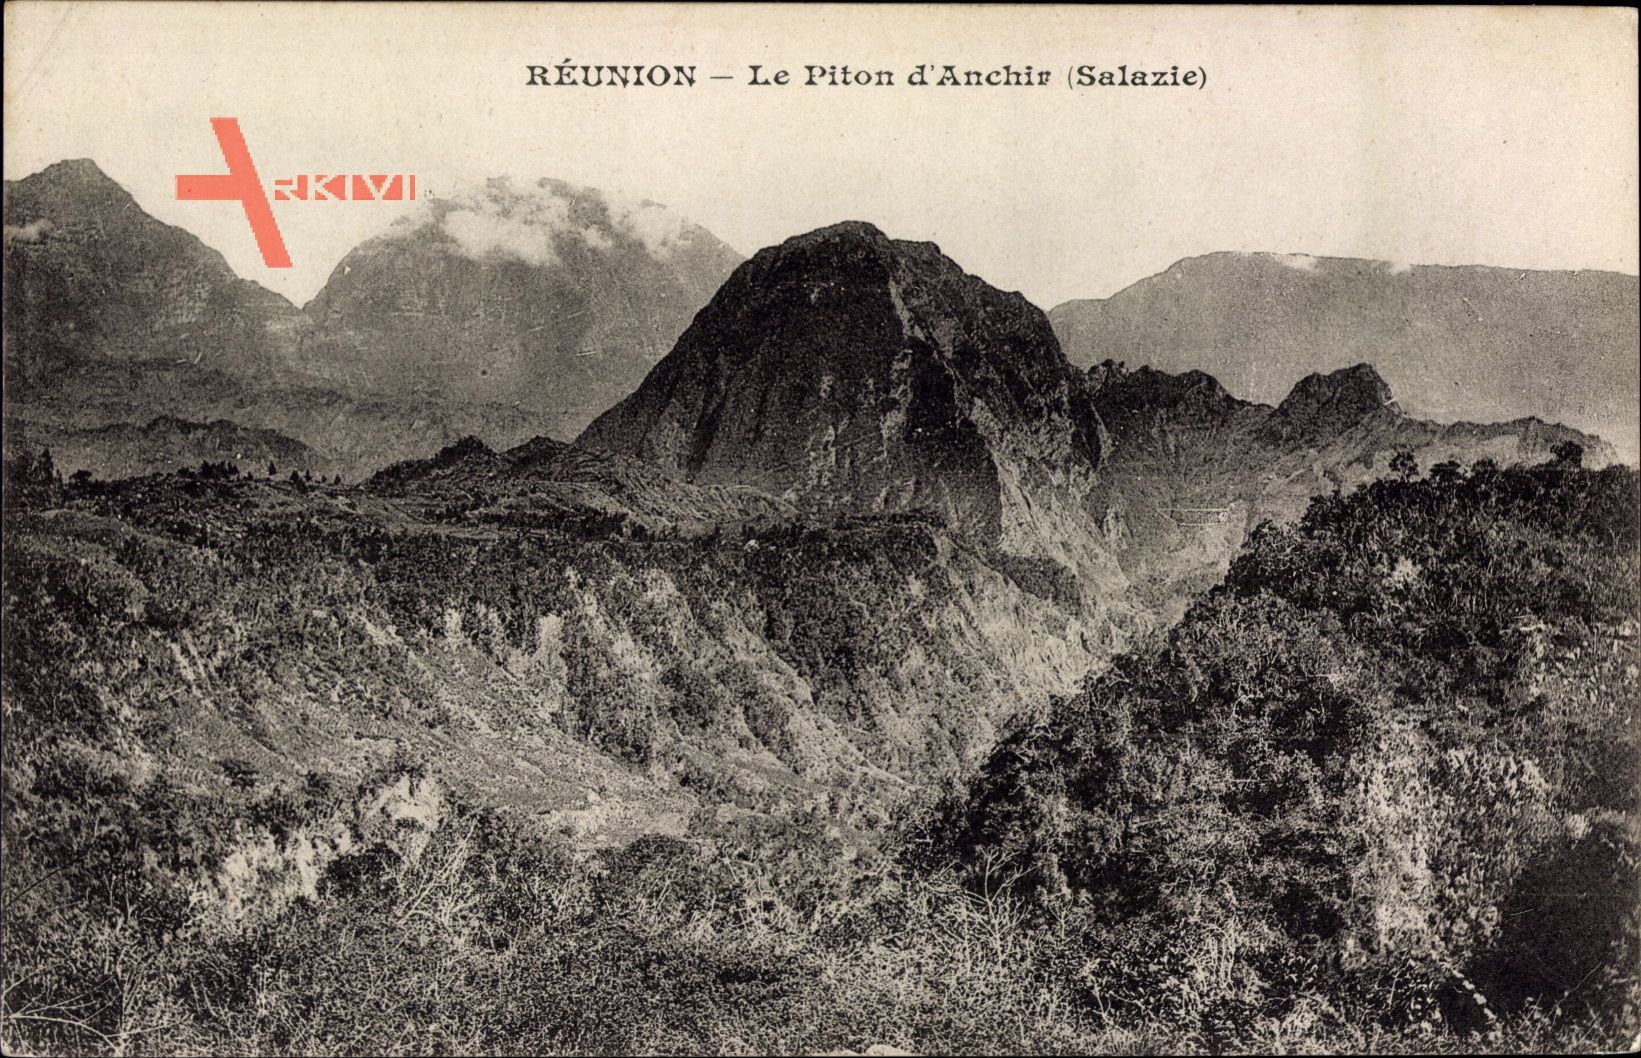 Réunion, Le Piton d'Achir, Salazie, Berggipfel, Gebirge